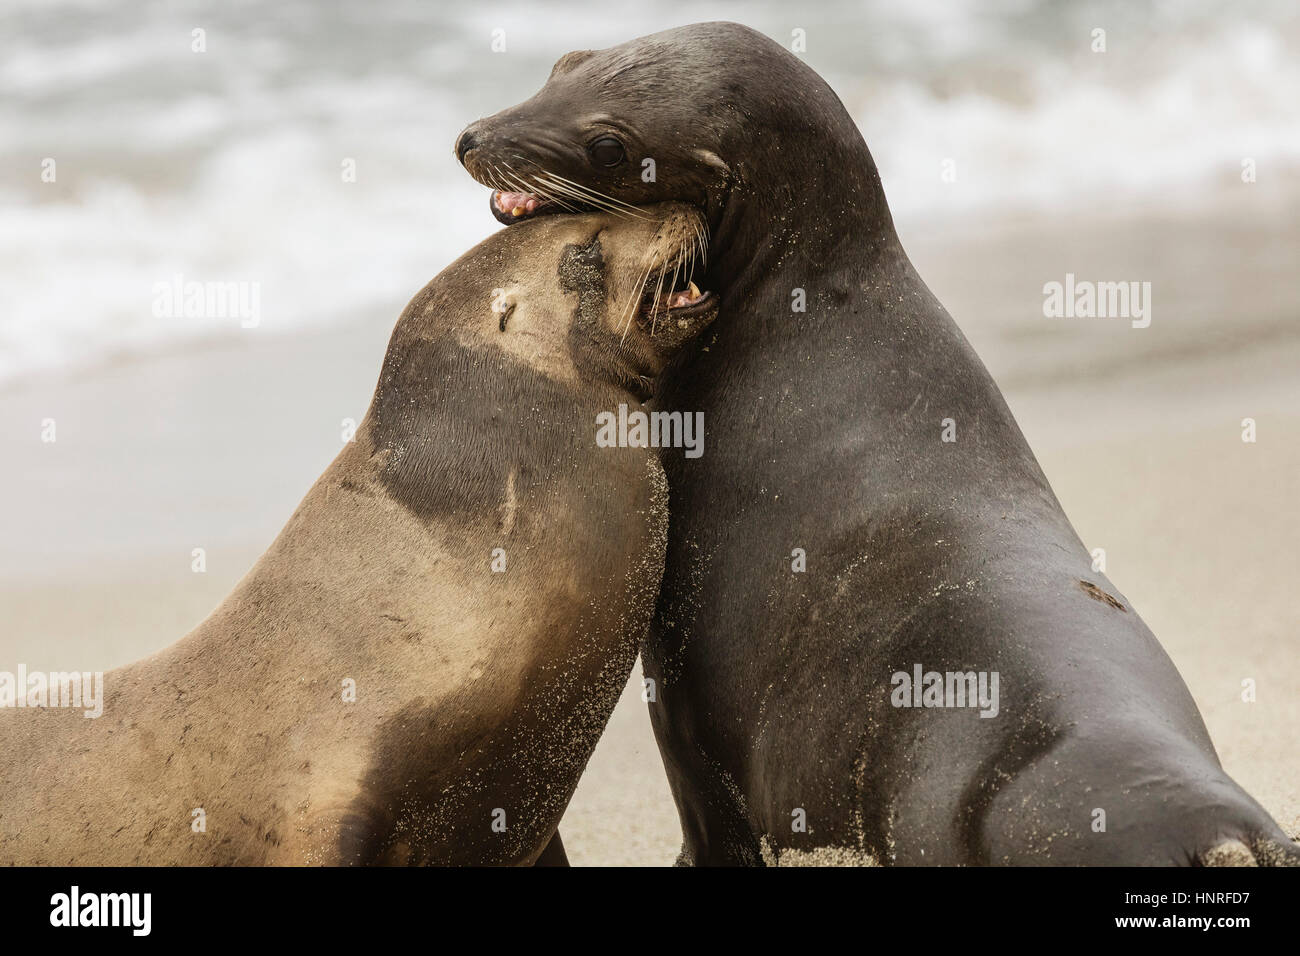 Sea Lions basking and socializing at La Jolla Cove, California, USA Stock Photo